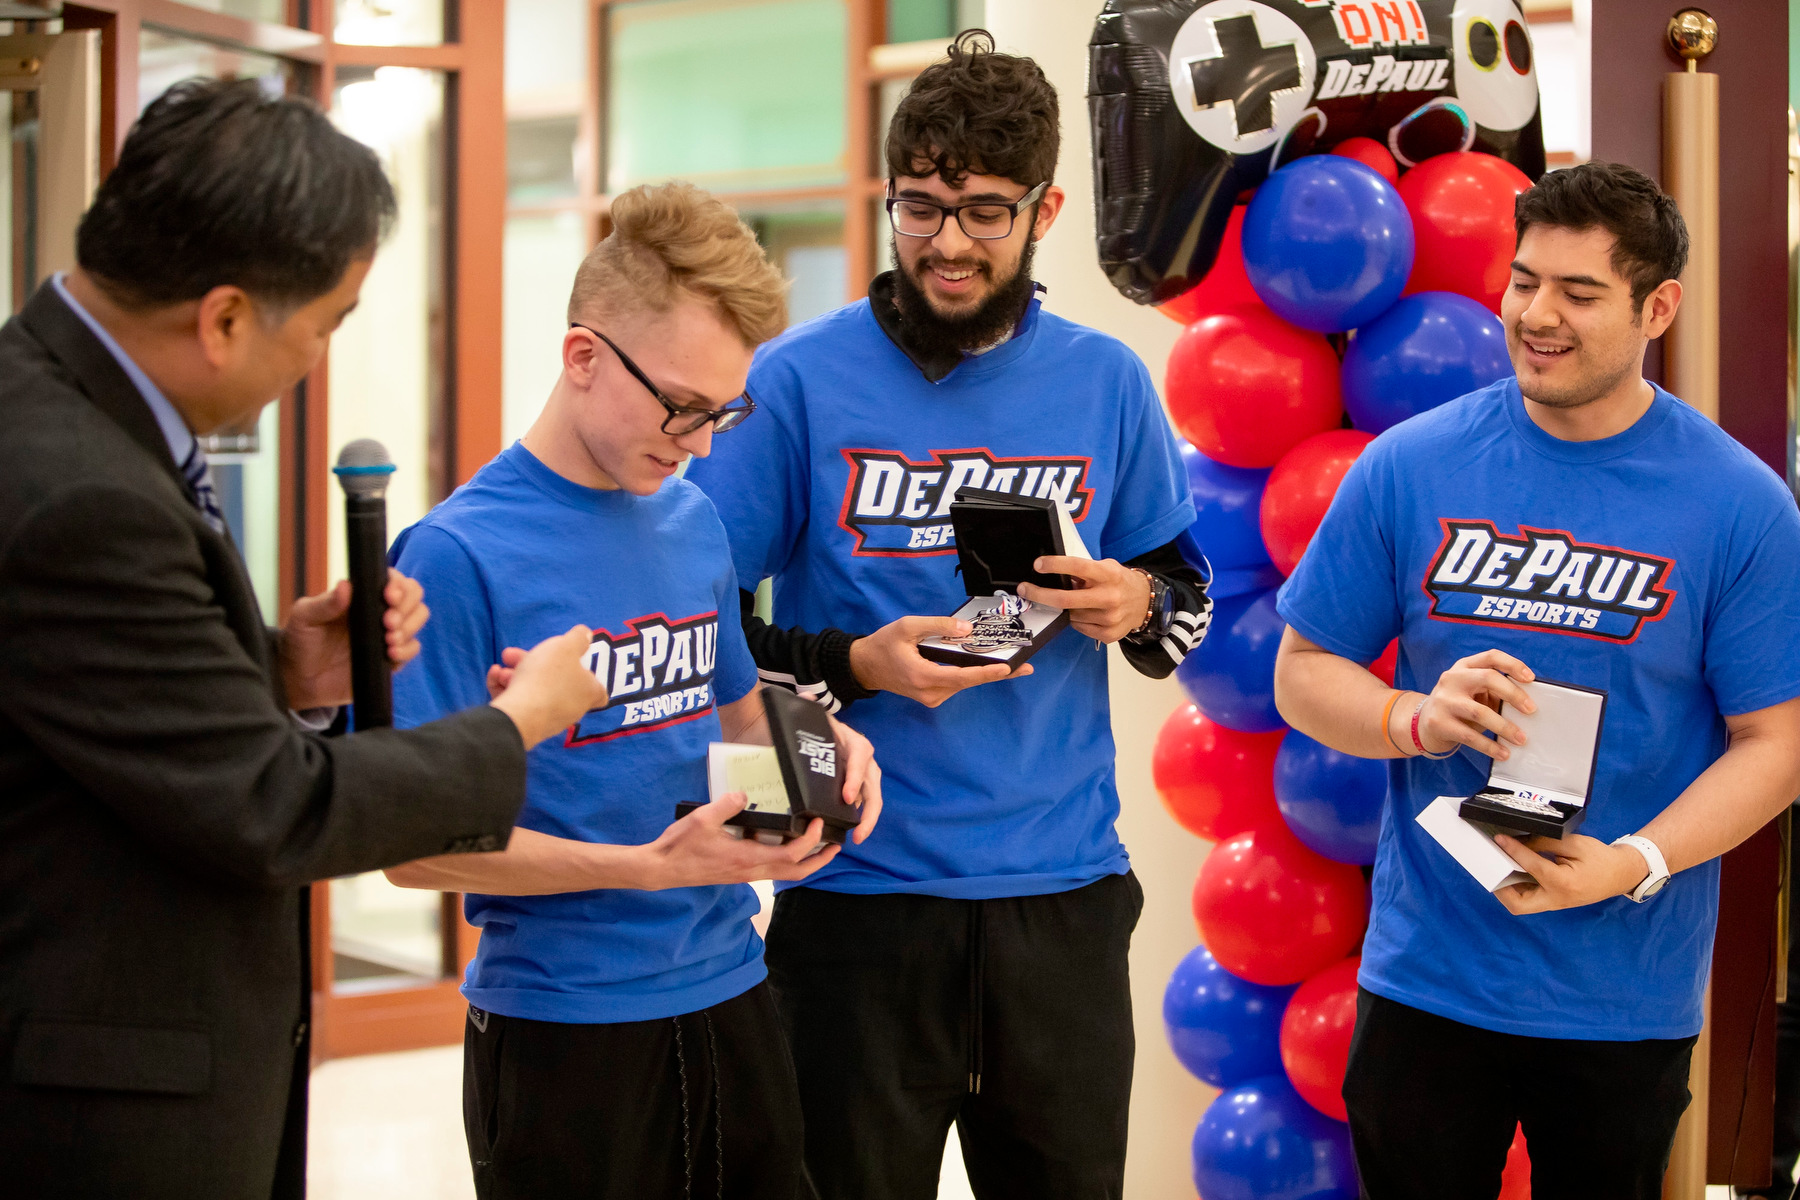 DePaul opens Esports Gaming Center